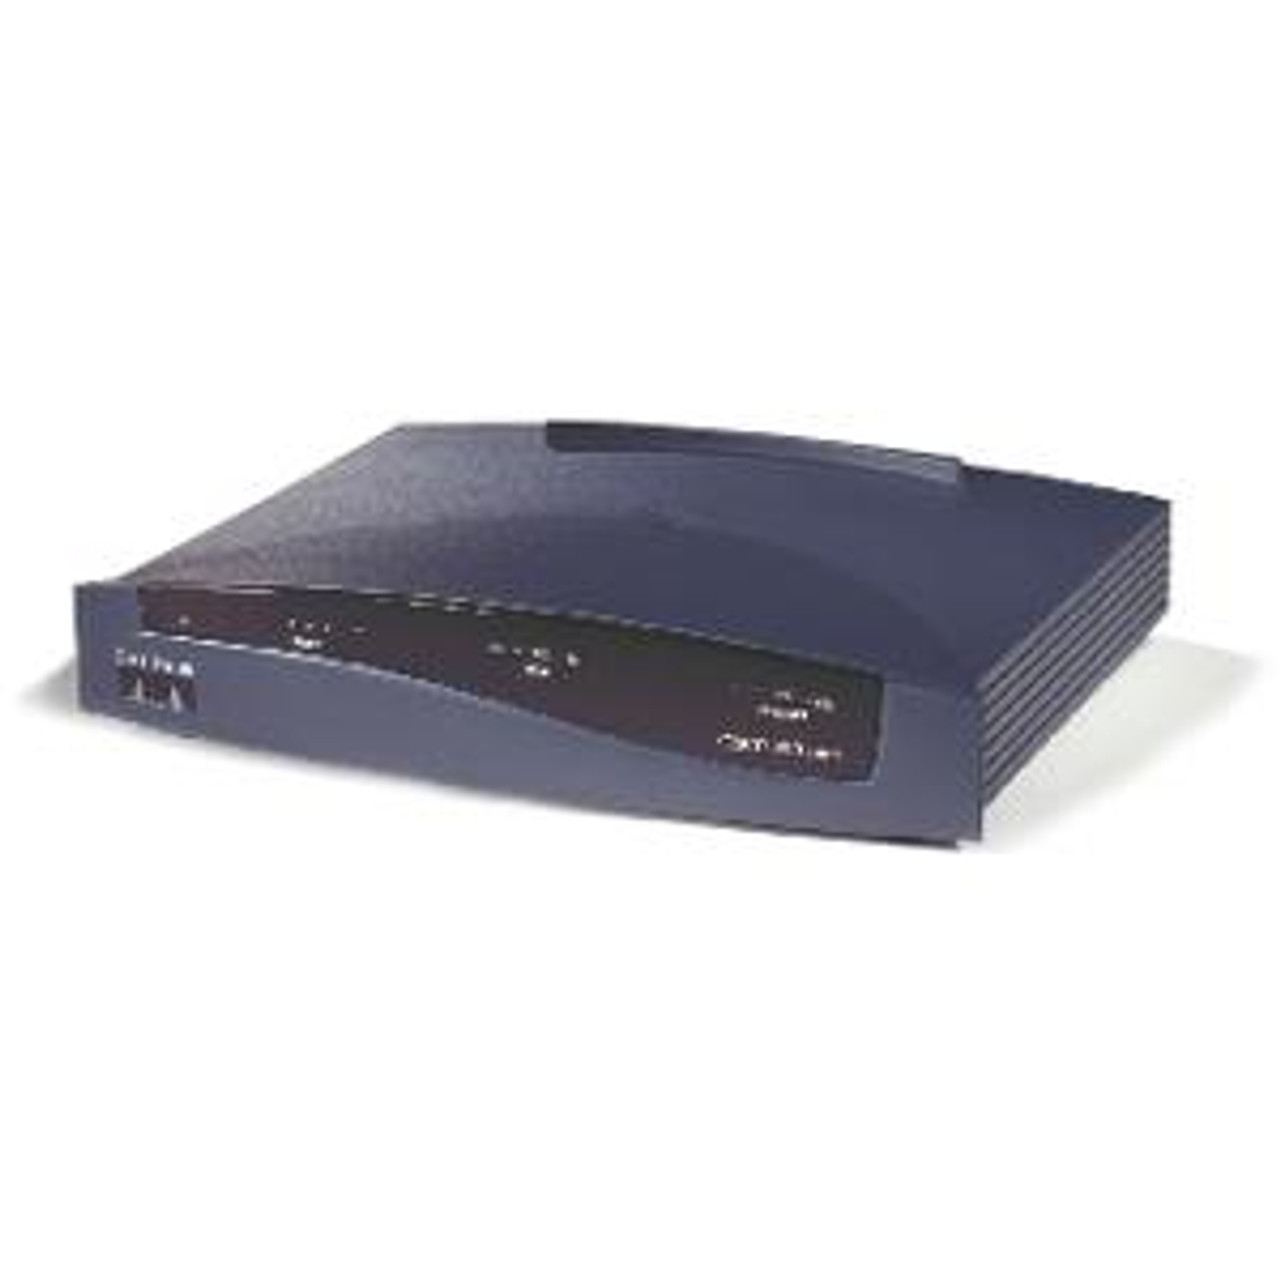 CISCO827H - Cisco 827H Router 4 x 10Base-T LAN 1 x ADSL WAN (Refurbished)